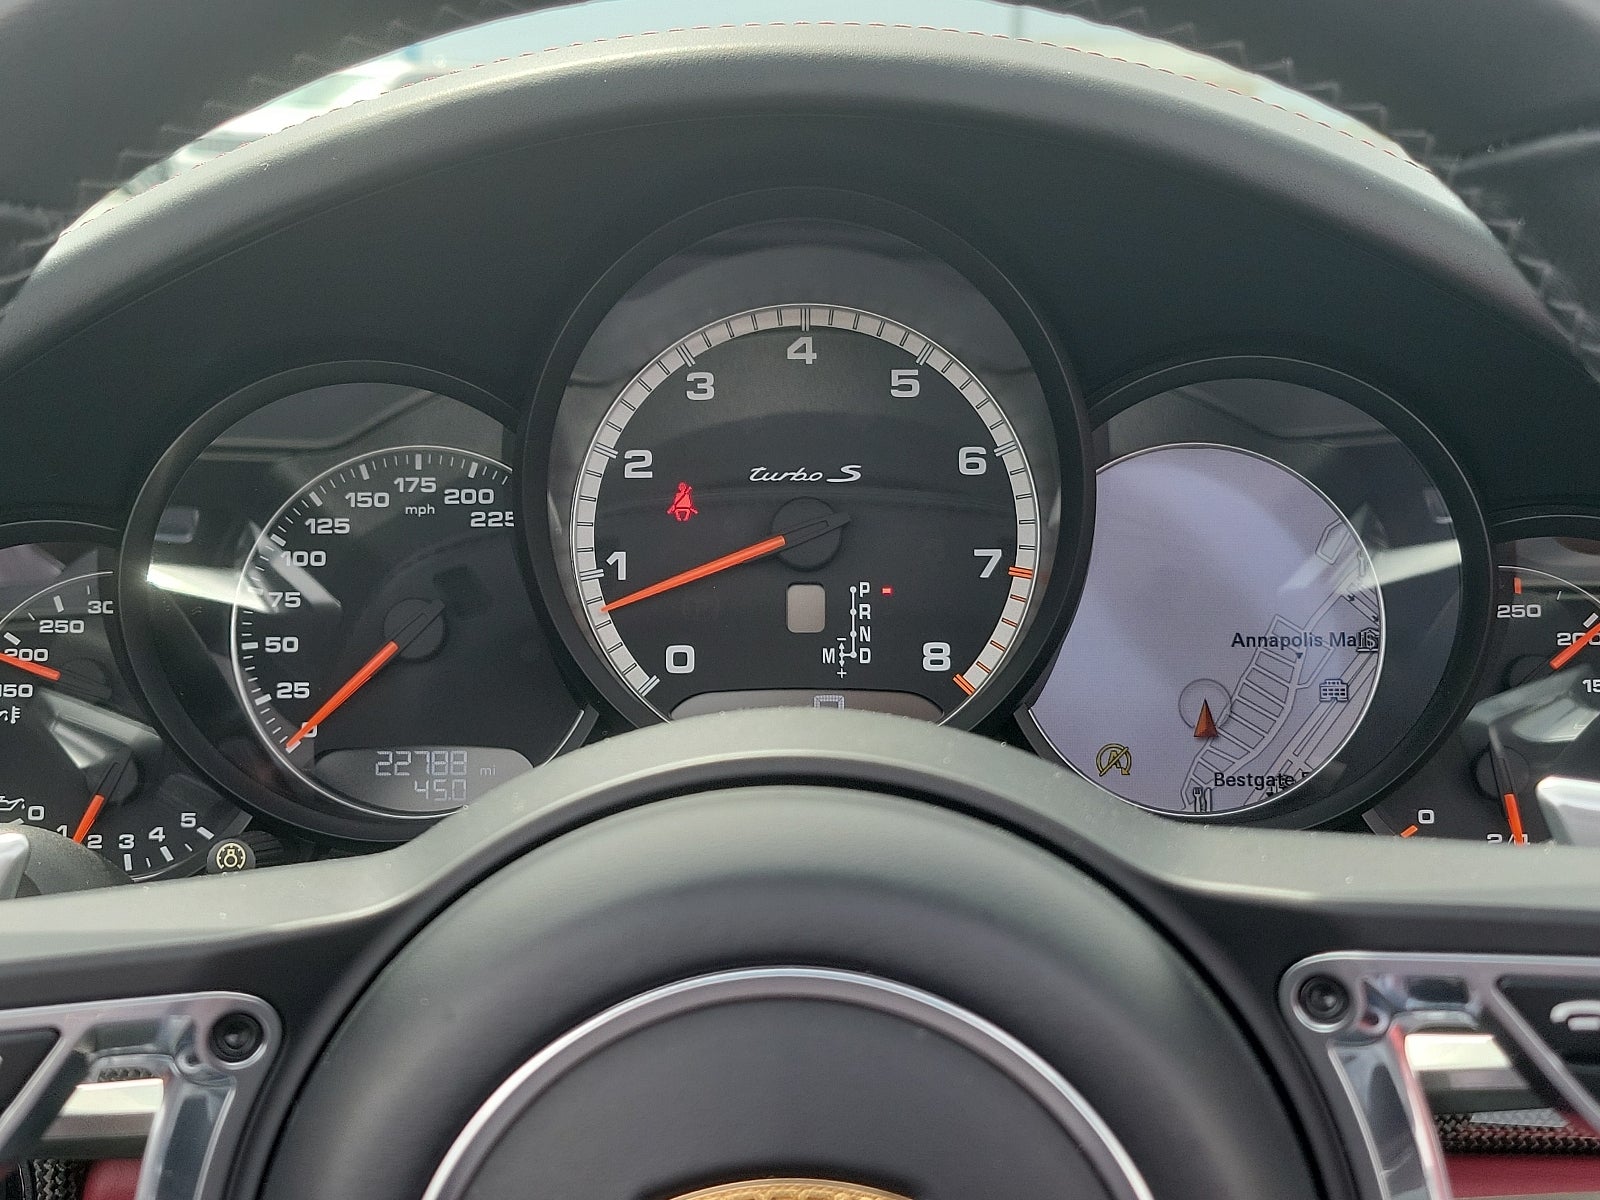 2019 Porsche 911 Turbo